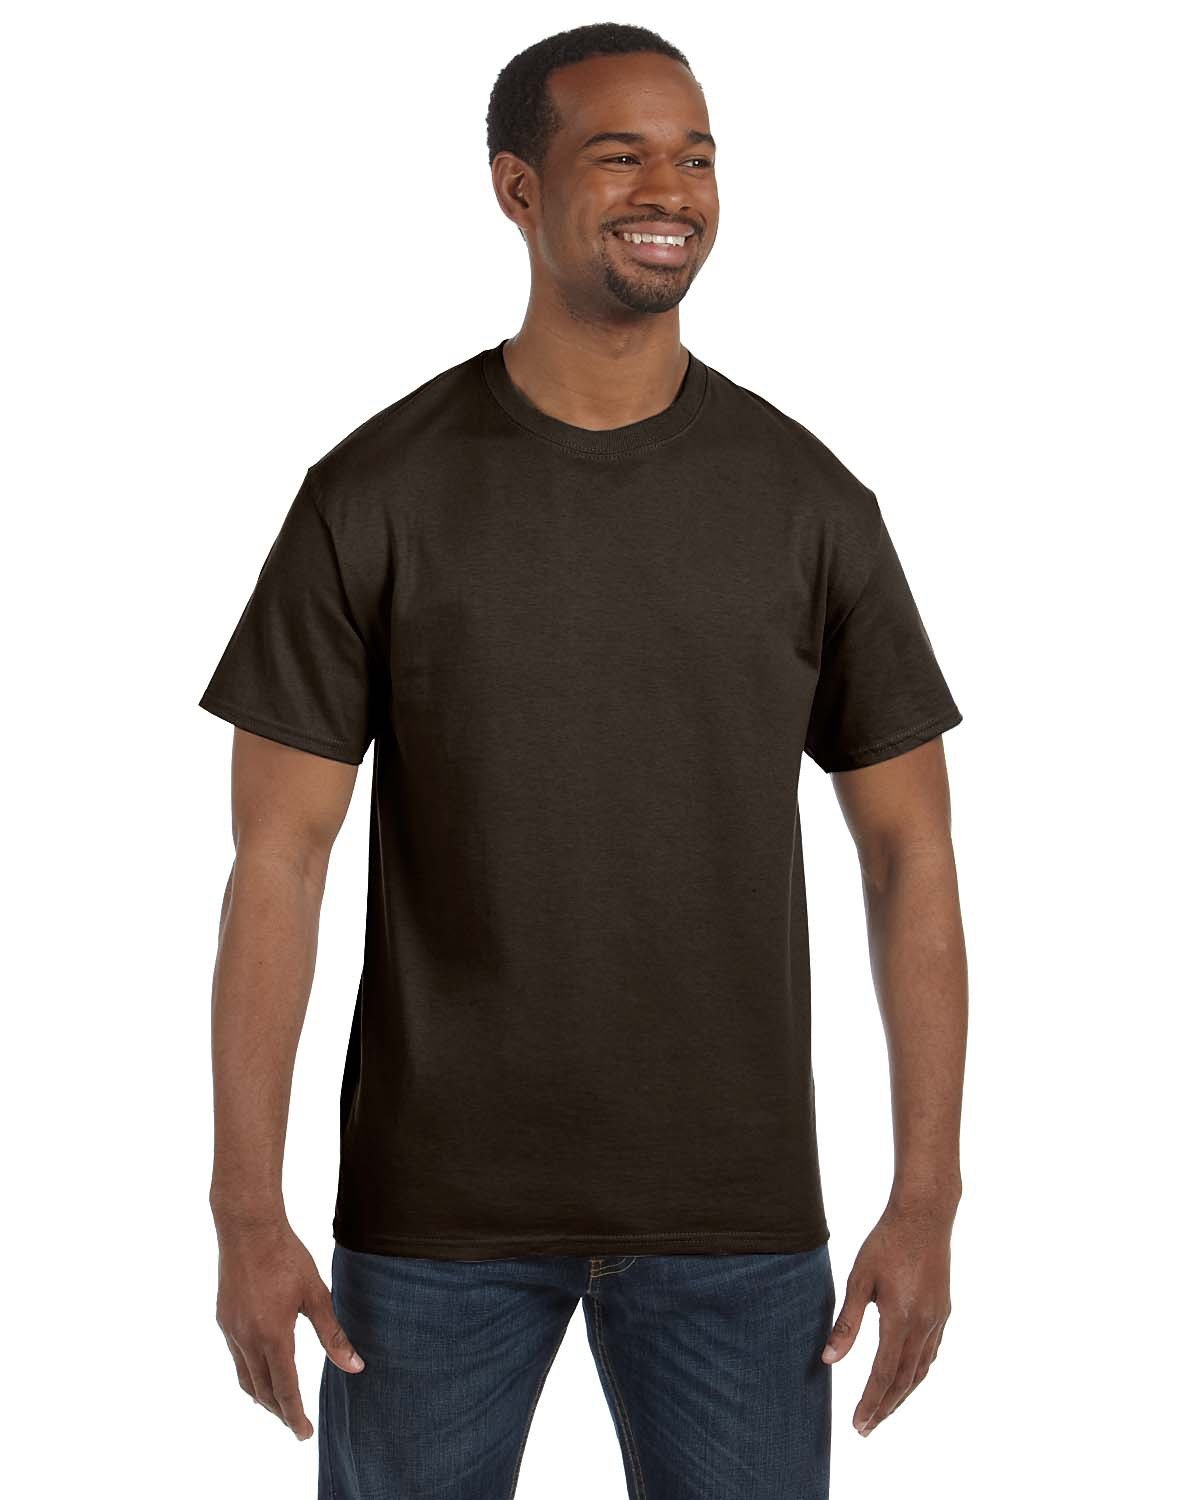 Tagless 100% Cotton T-Shirt 